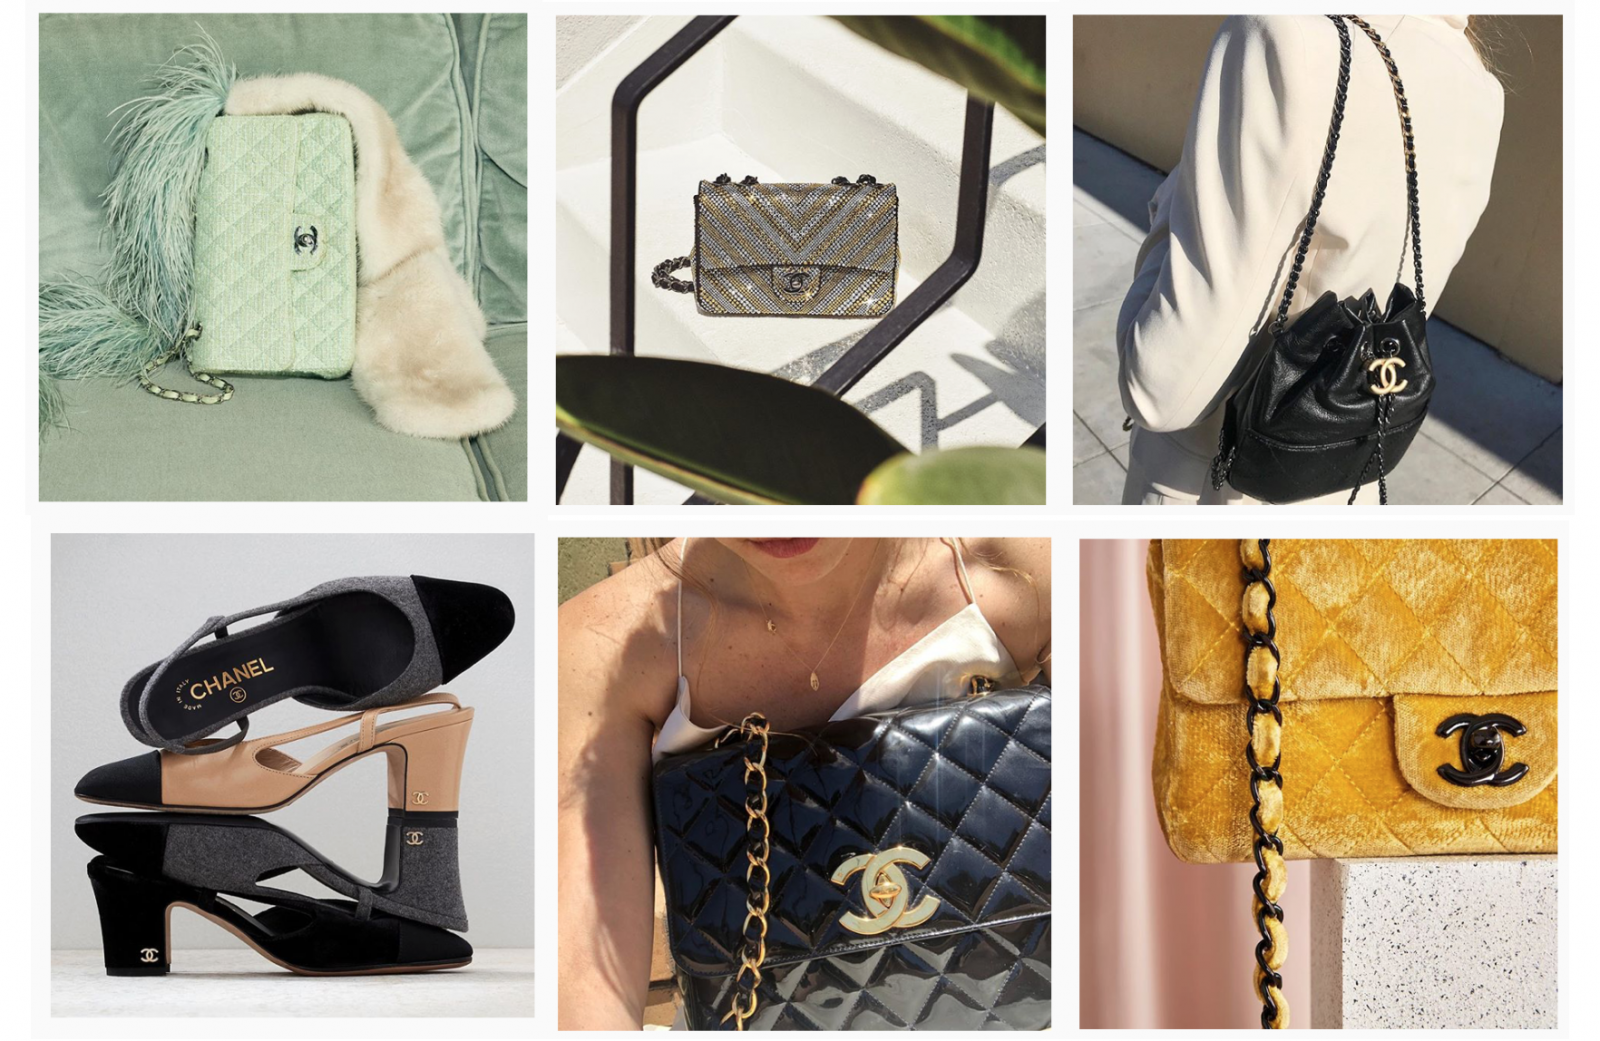 Hermès and LVMH Stocks Are as Trendy as Their Handbags - WSJ